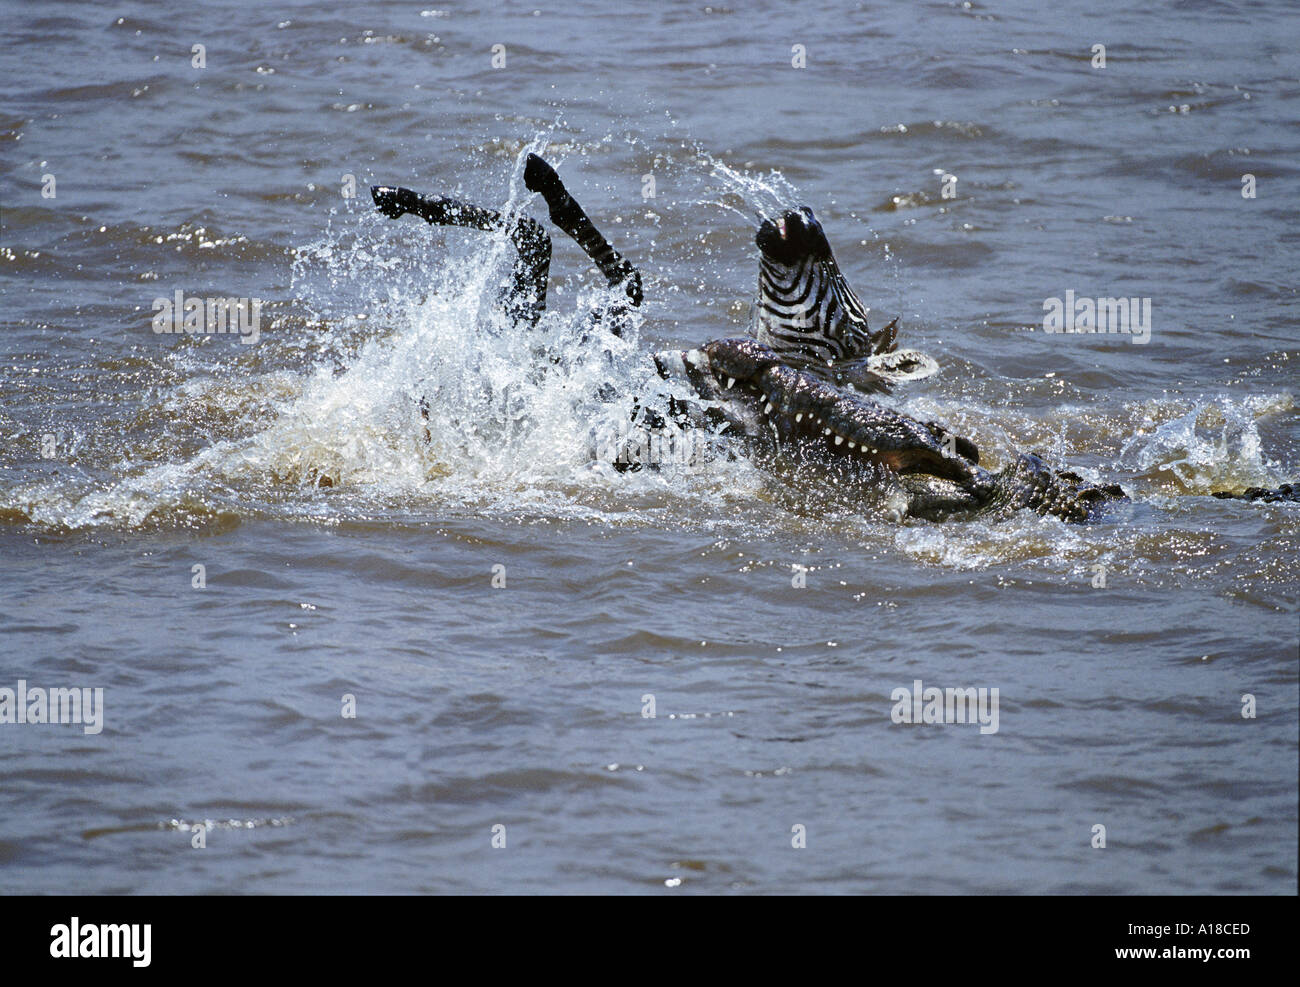 Crocodile attacking zebra Mara River Kenya Stock Photo